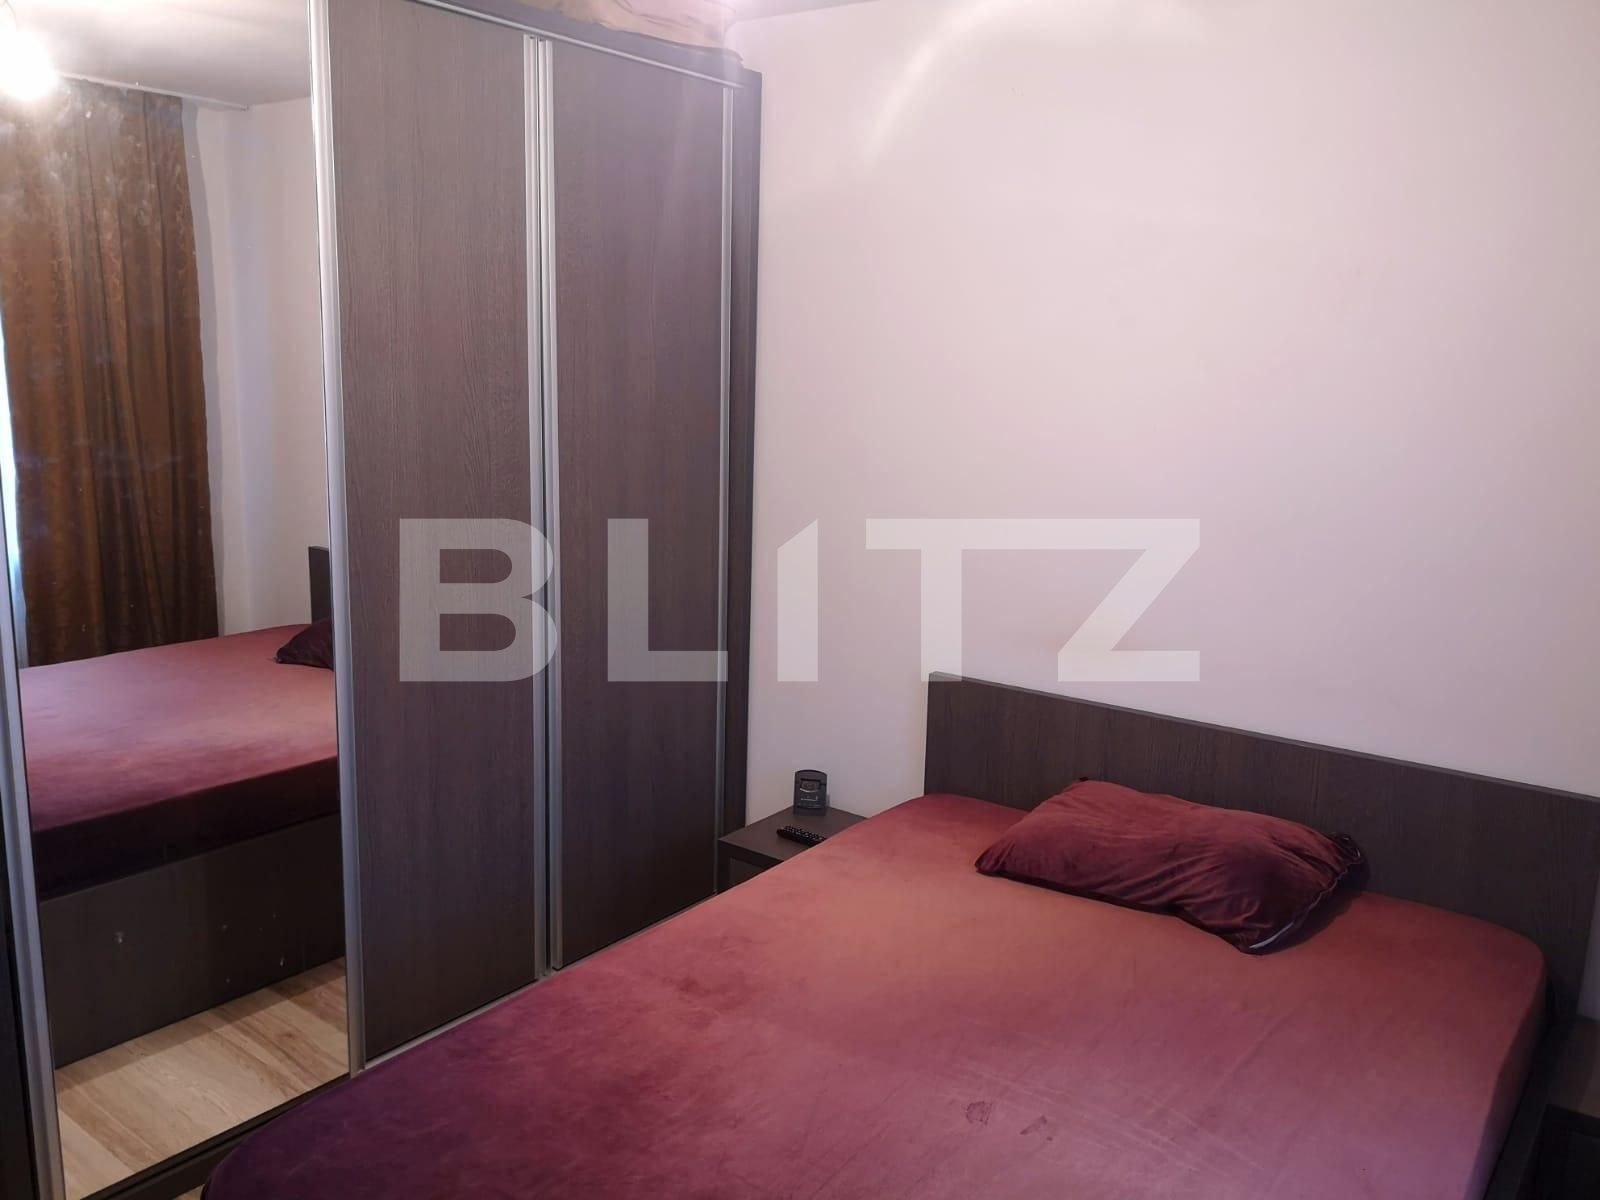 Apartament cochet cu 2 camere bilateral si decomandat, in zona Spitalul Miliar